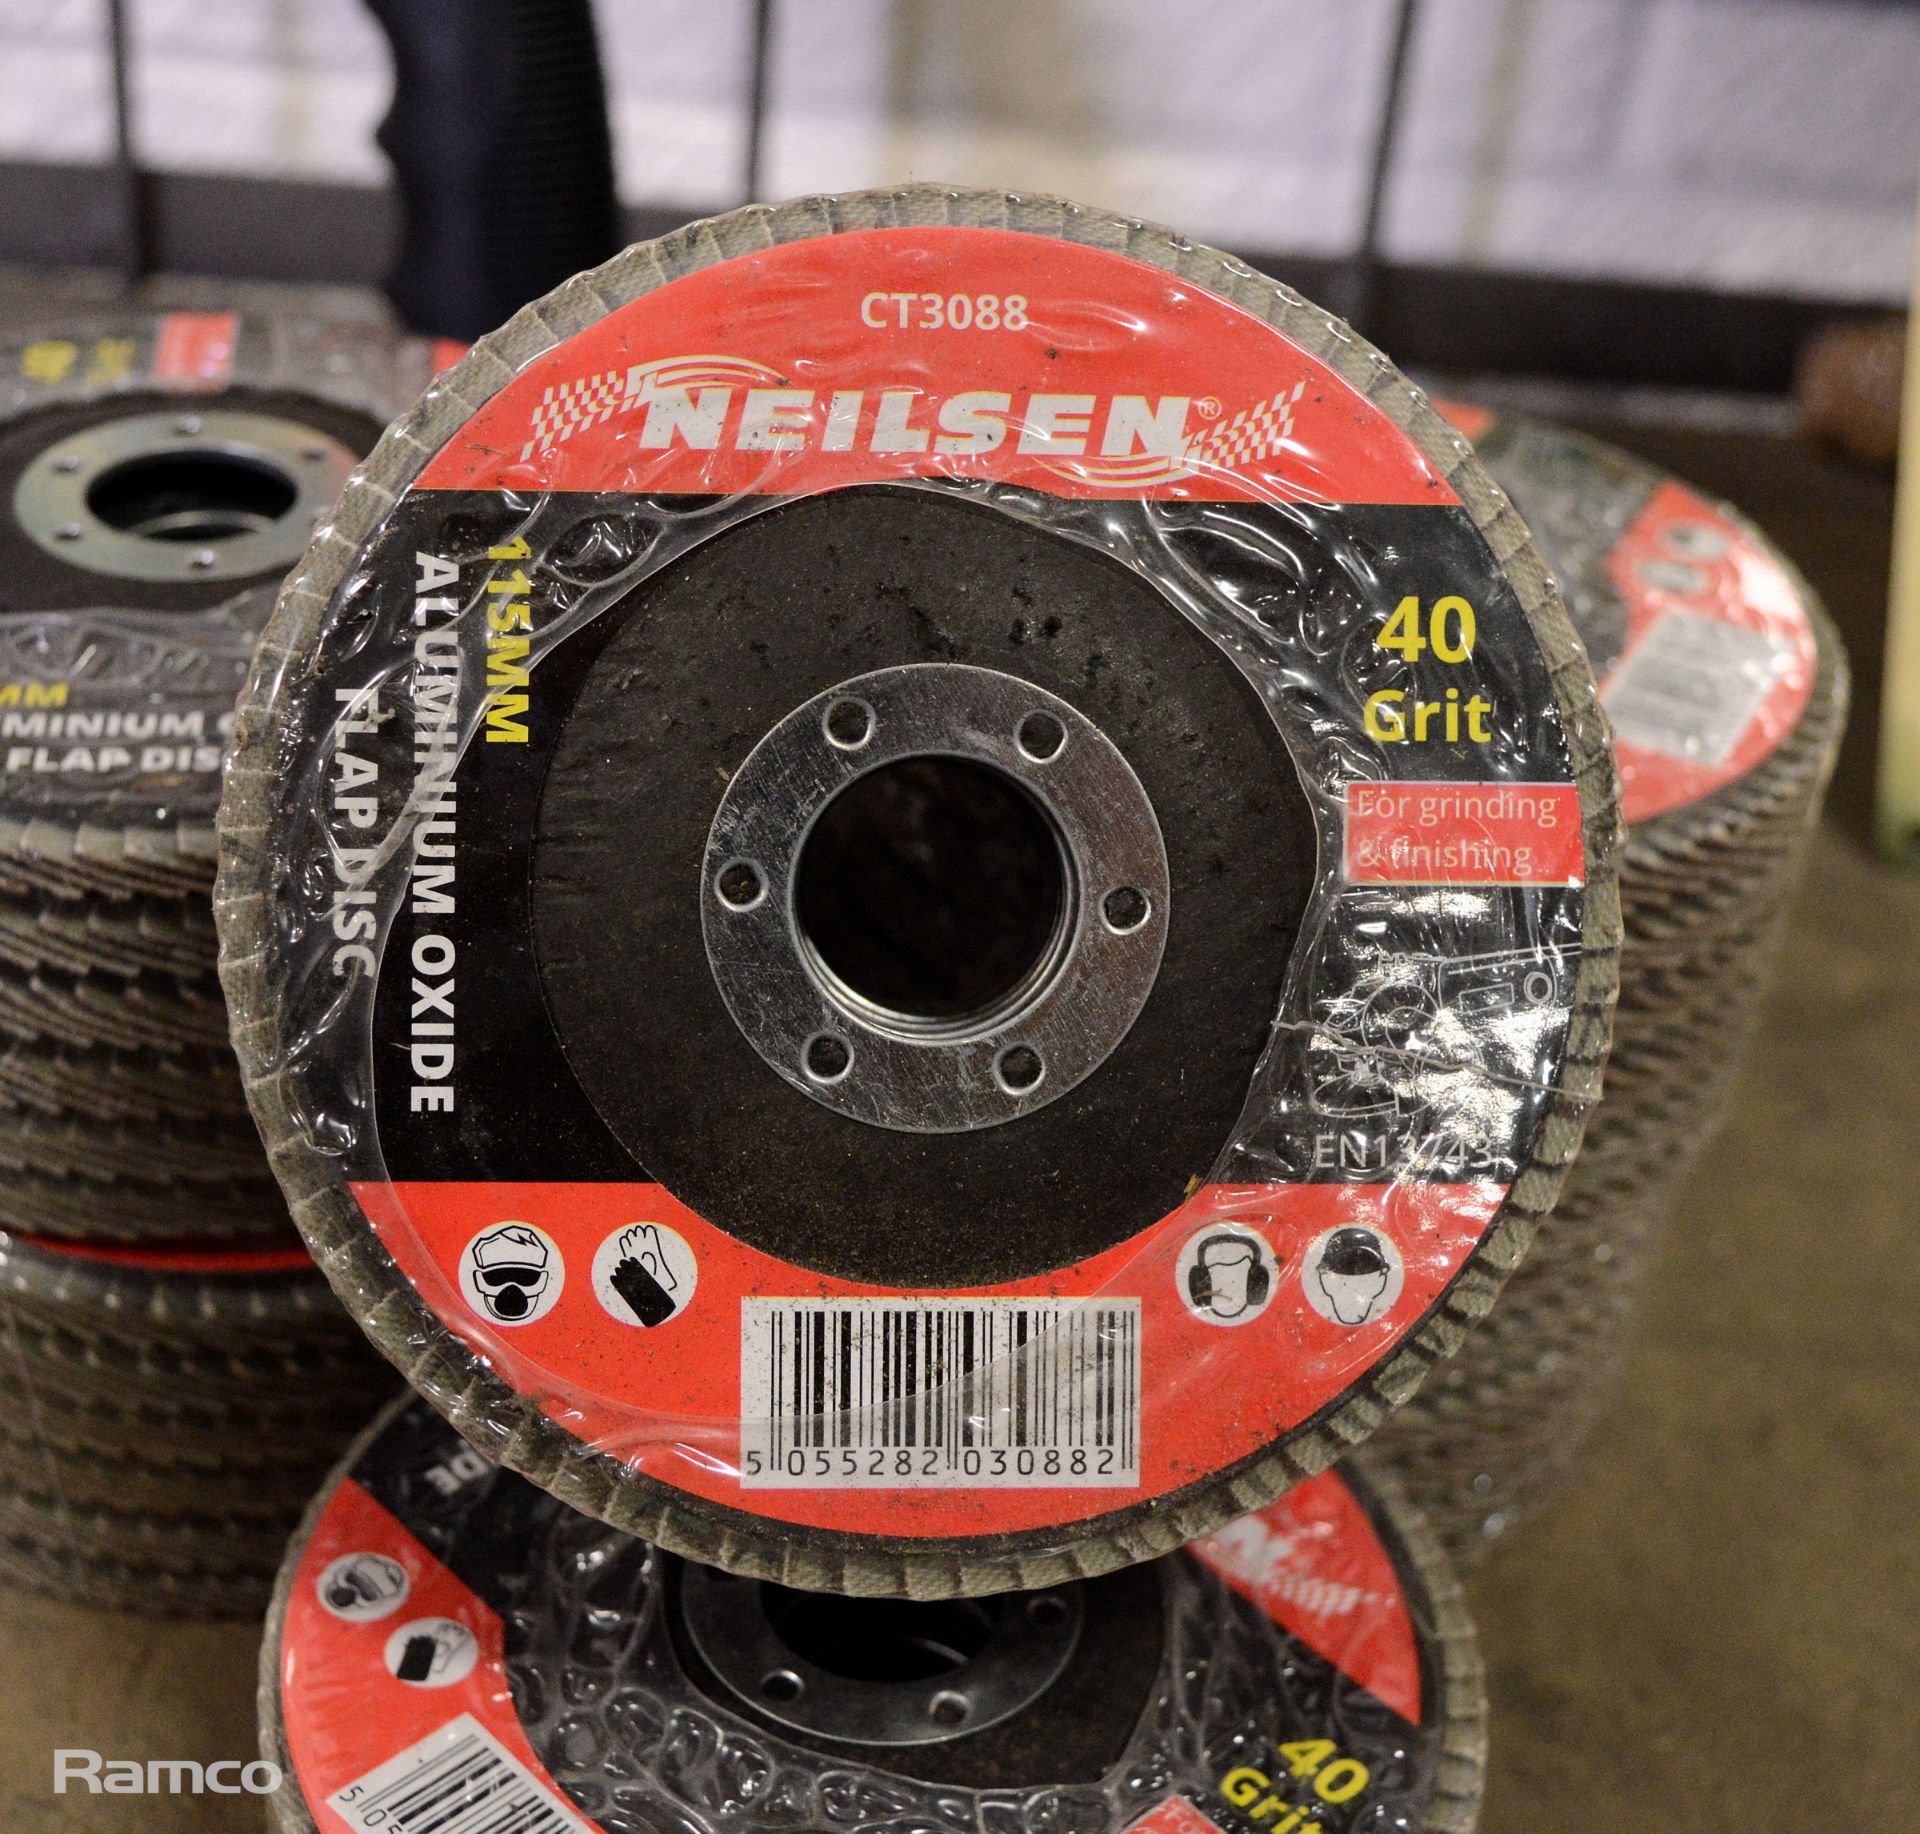 Neilsen 40 grit aluminium oxide flap discs - 6 per pack - 6 packs - Image 2 of 2